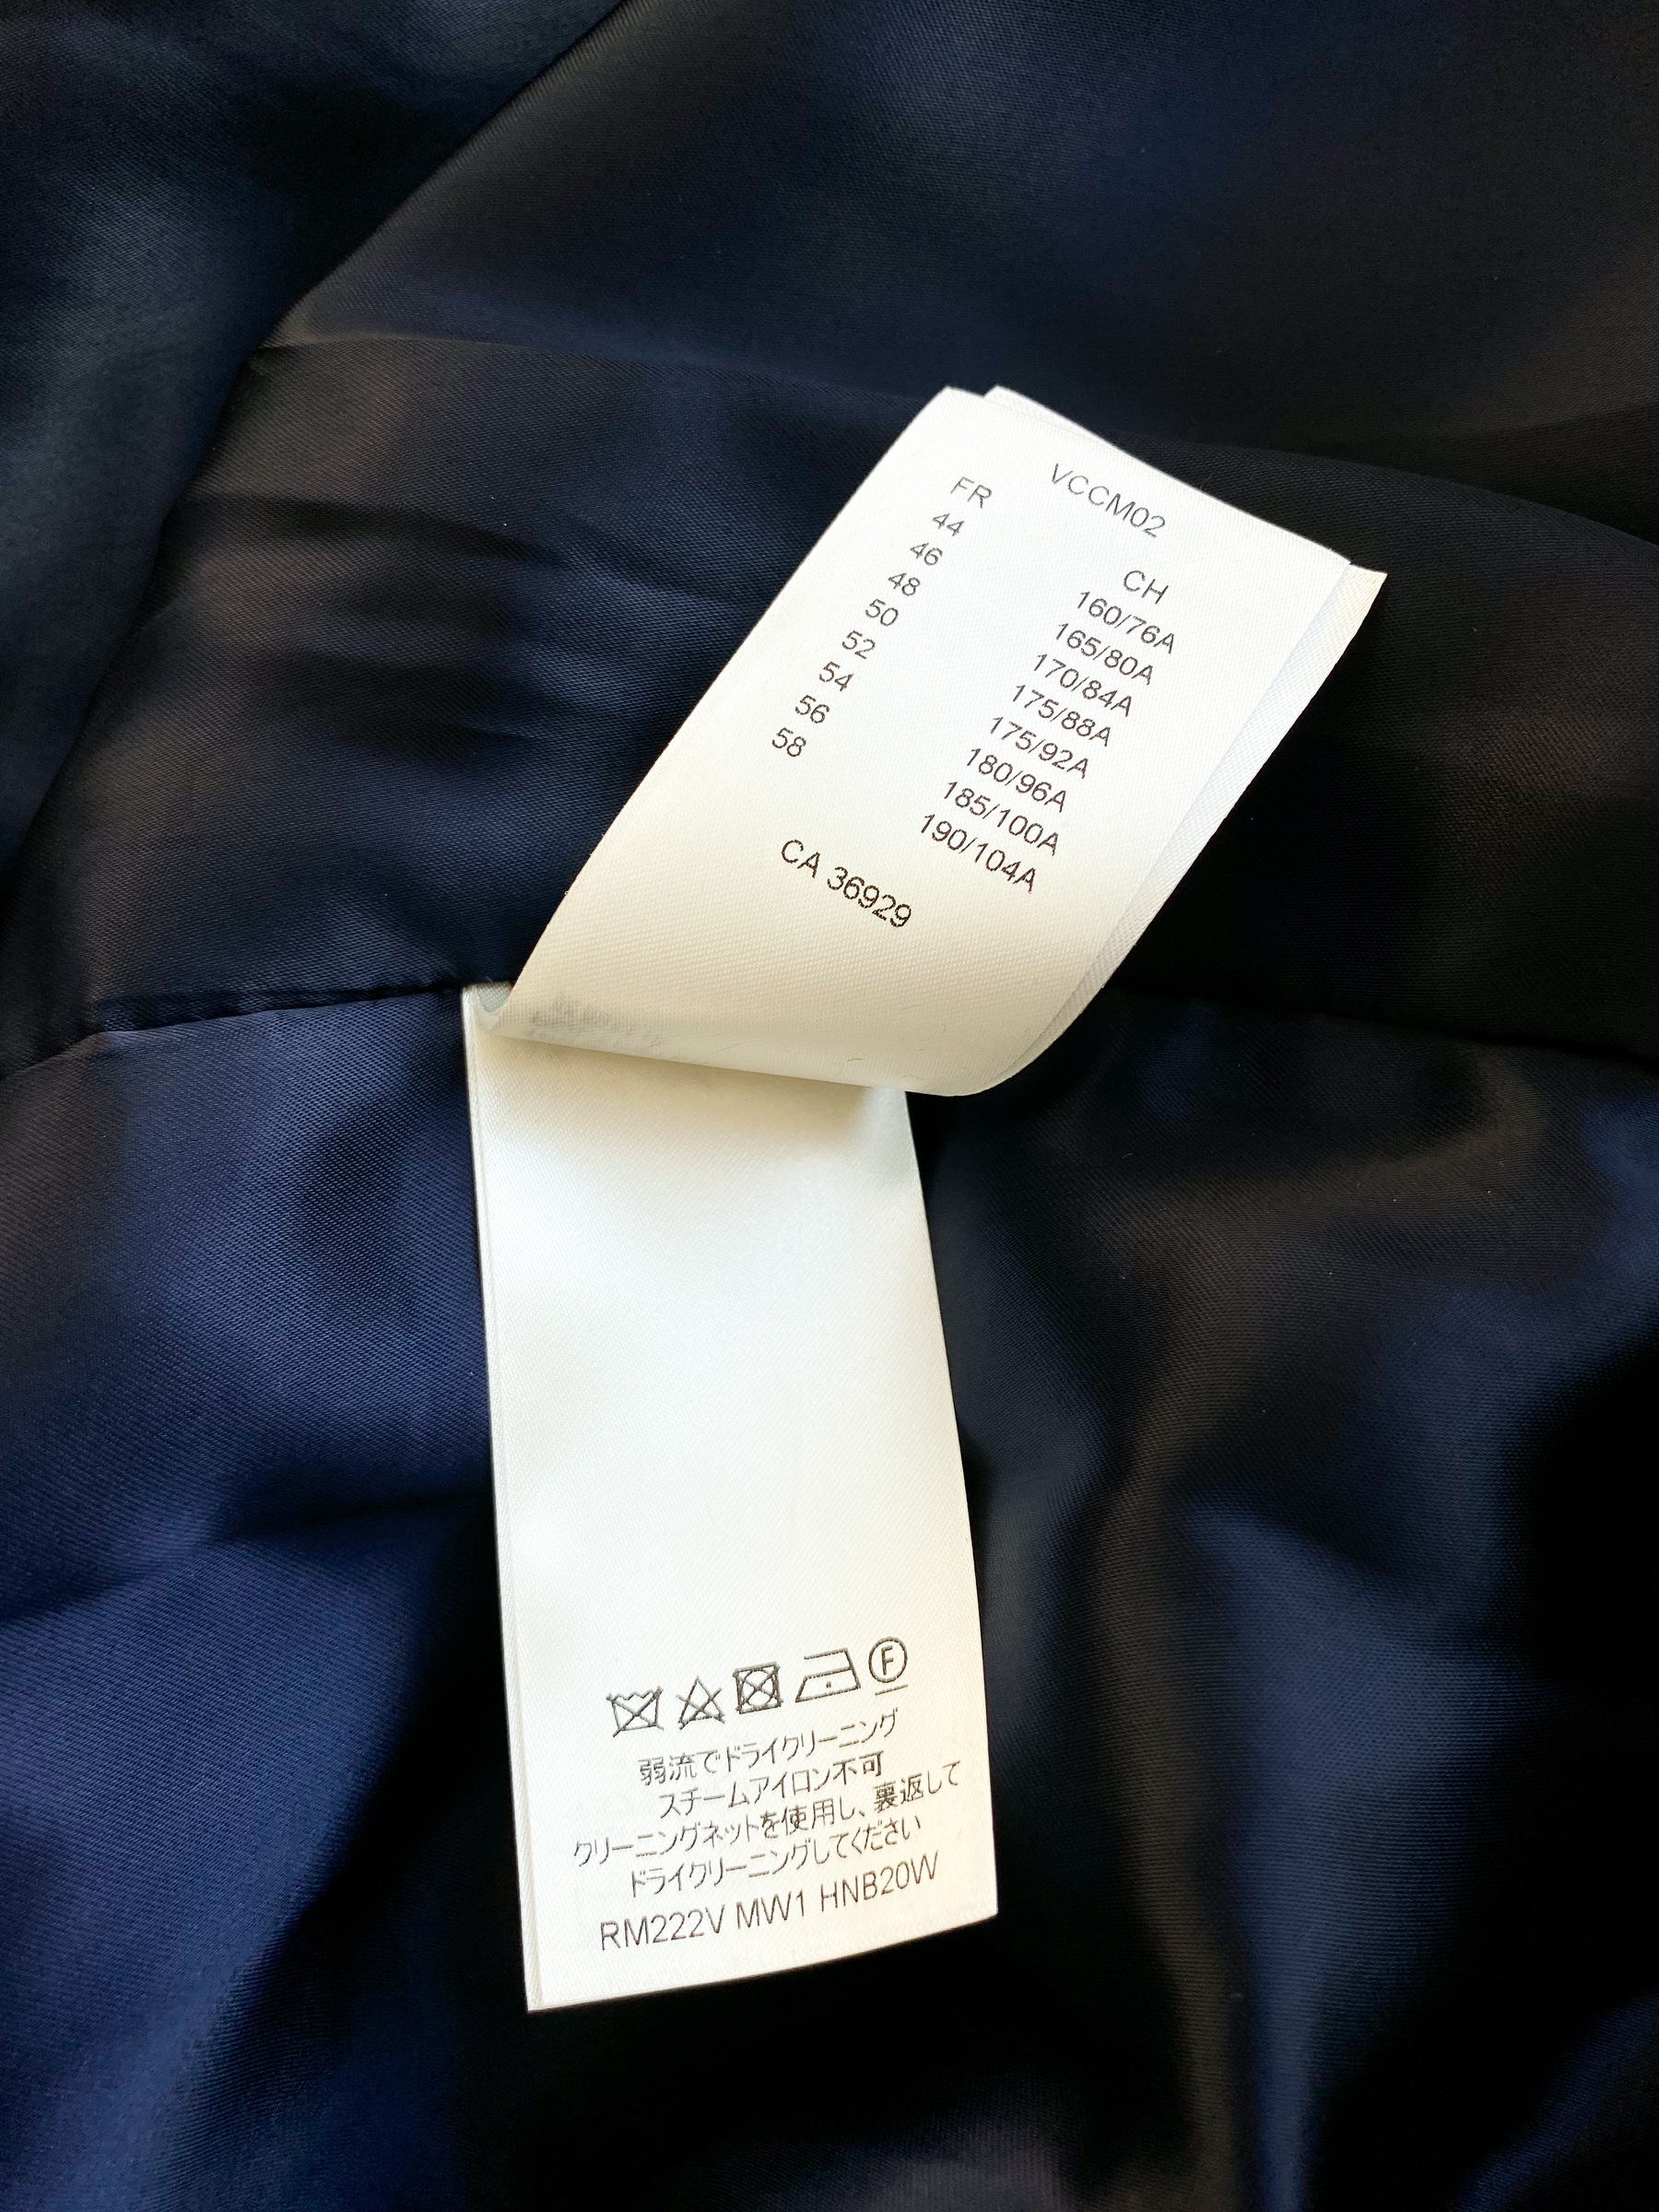 Louis Vuitton - Karakoram Denim Jacket - Black - Men - Size: 54 - Luxury